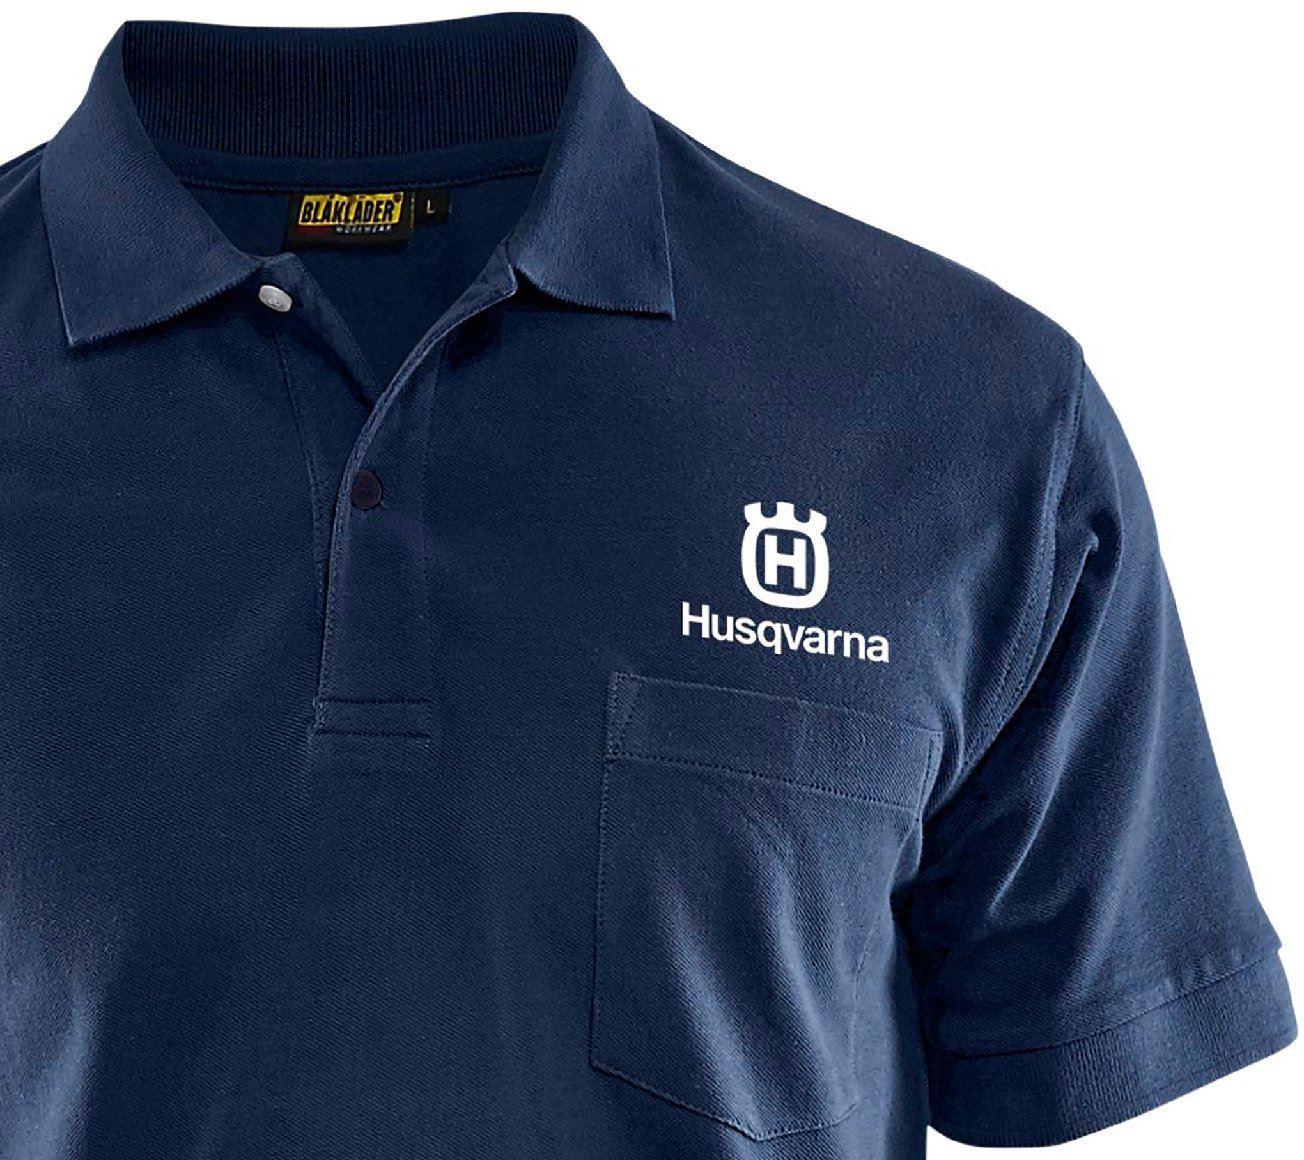 Husqvarna Poloshirt Shirt marine - MotorLand.at